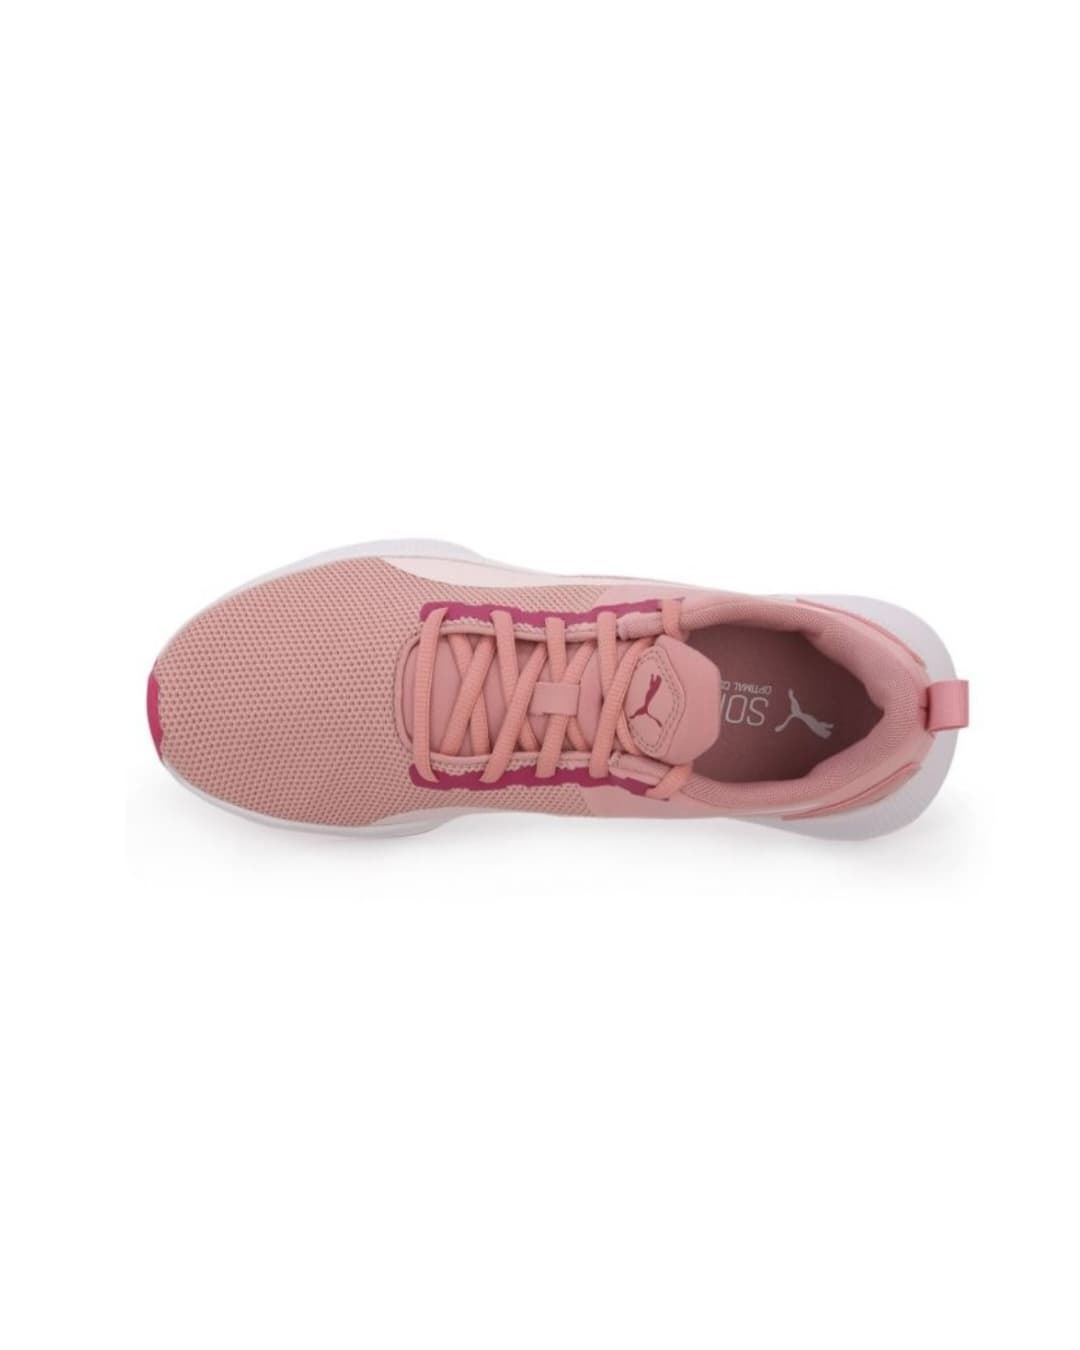 Puma Flyer Runner Jr Pink Sneakers - Image 3